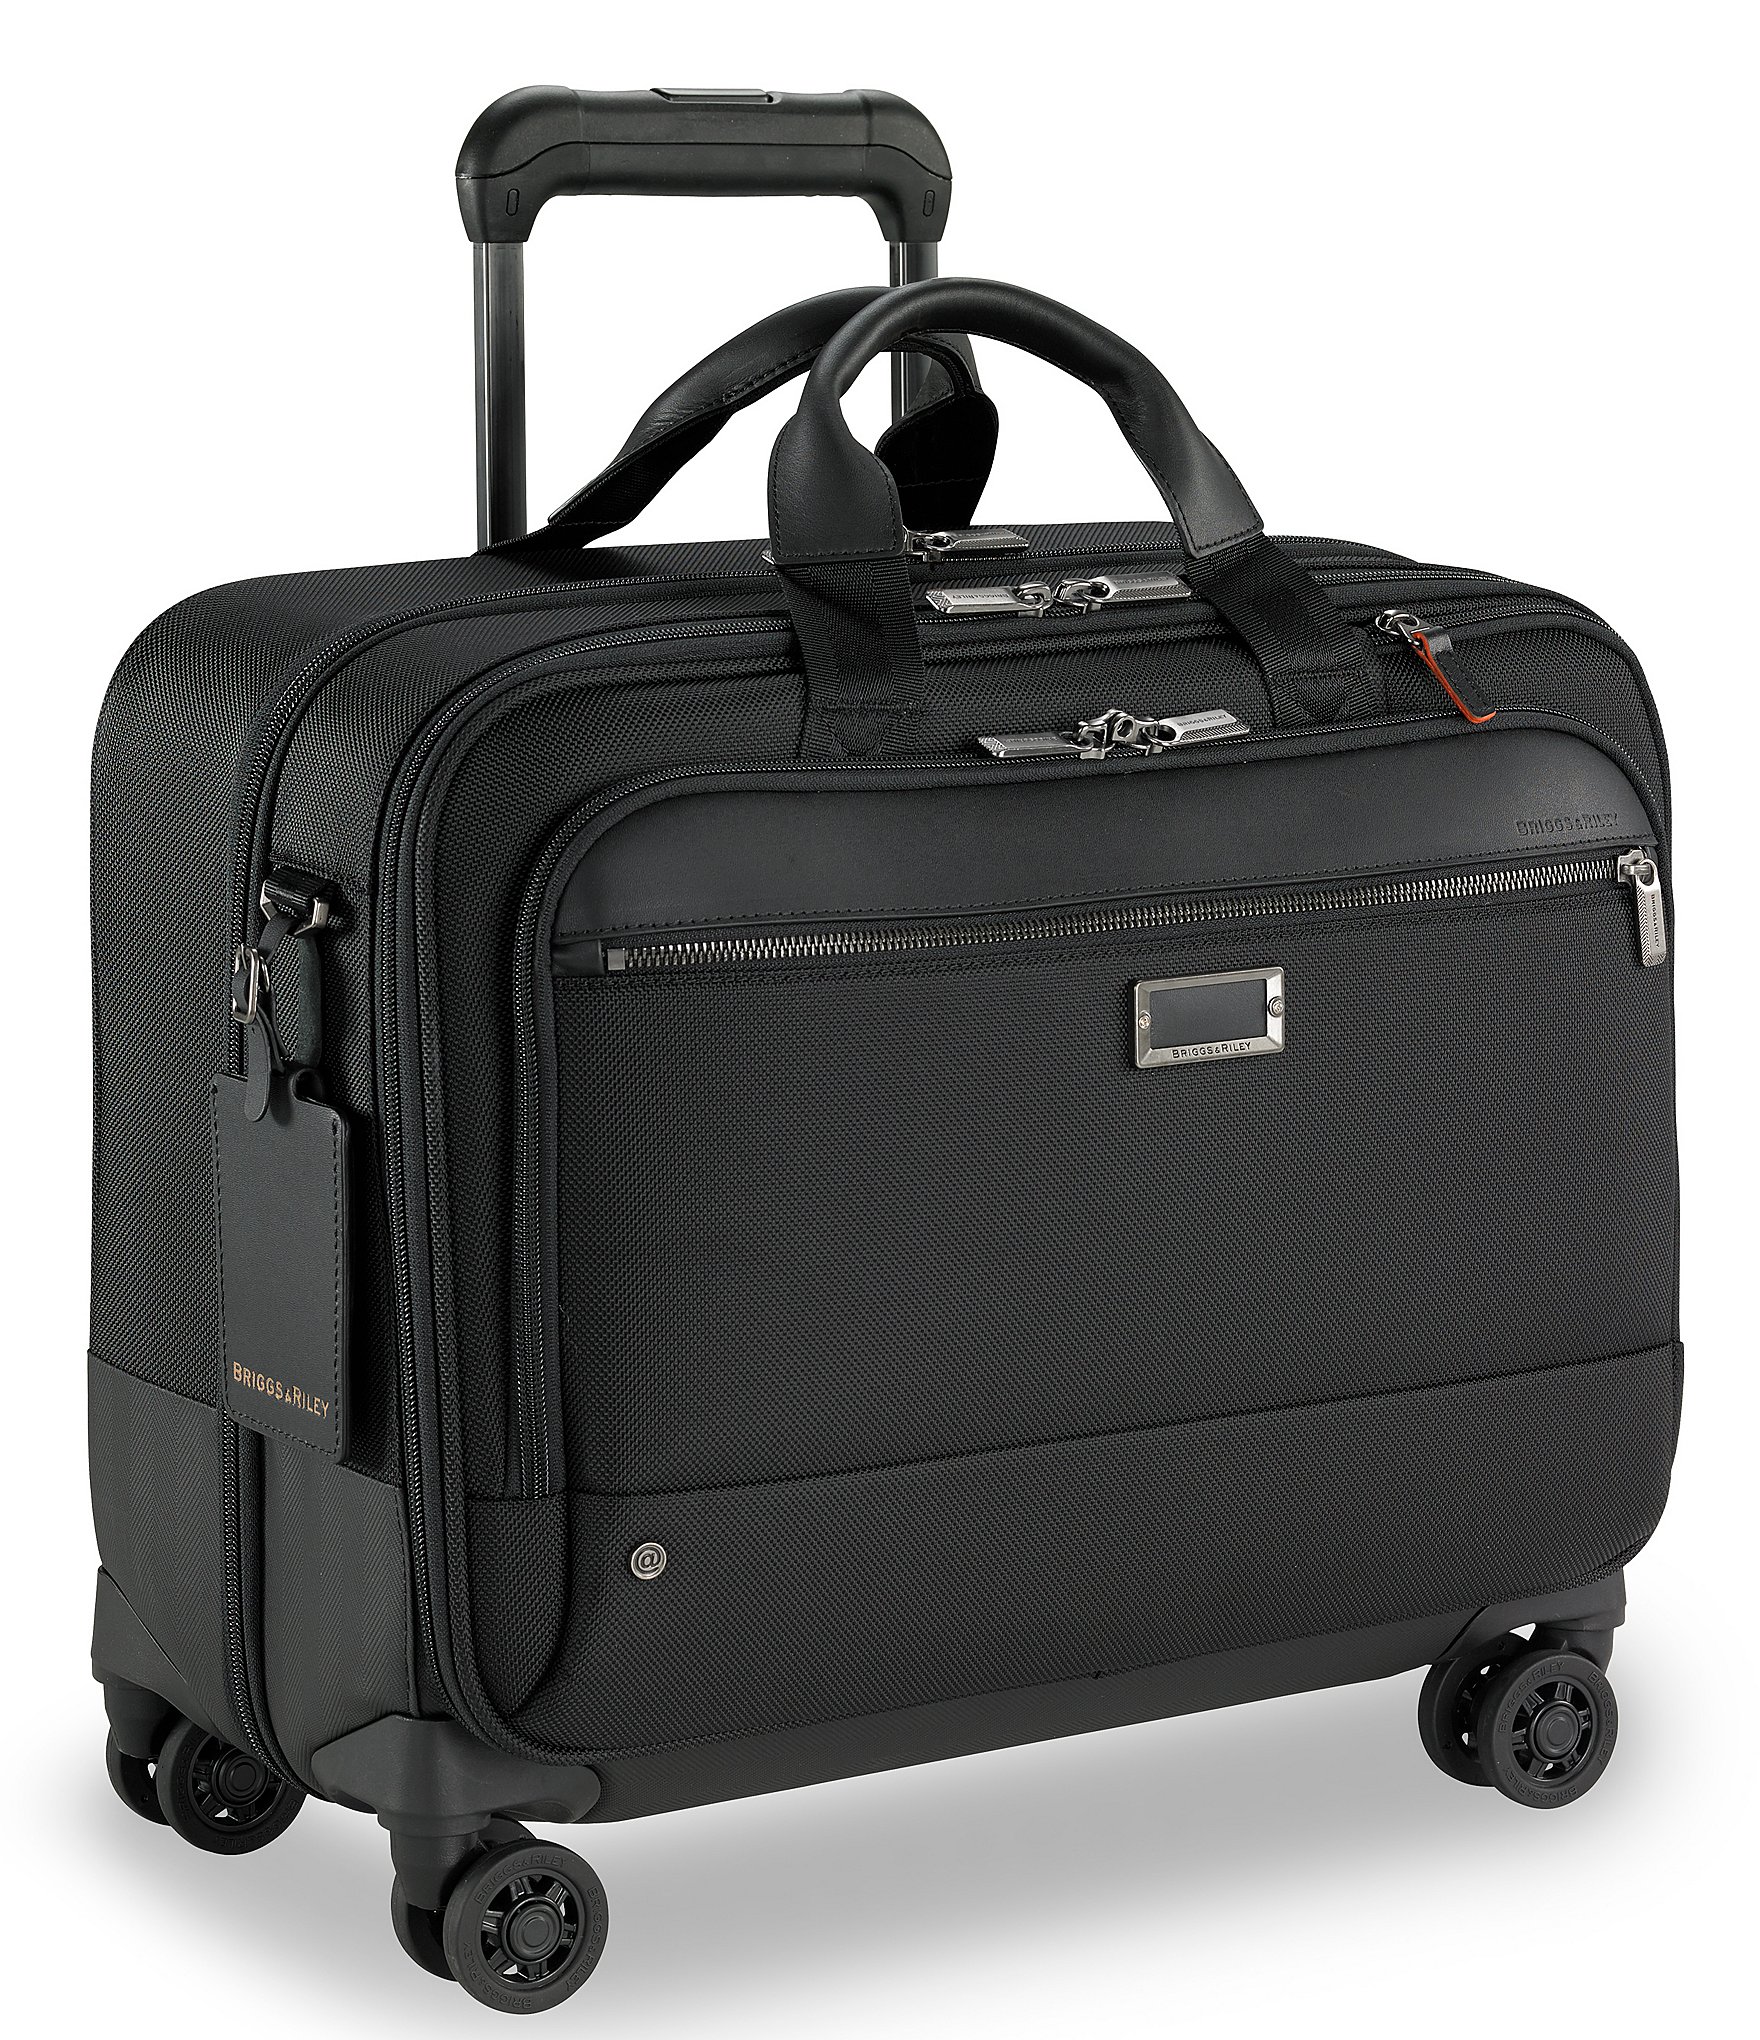 VÄRLDENS Carry-on bag with wheels, black, 13 ½x7 ¾x21 ¼/1014 oz - IKEA